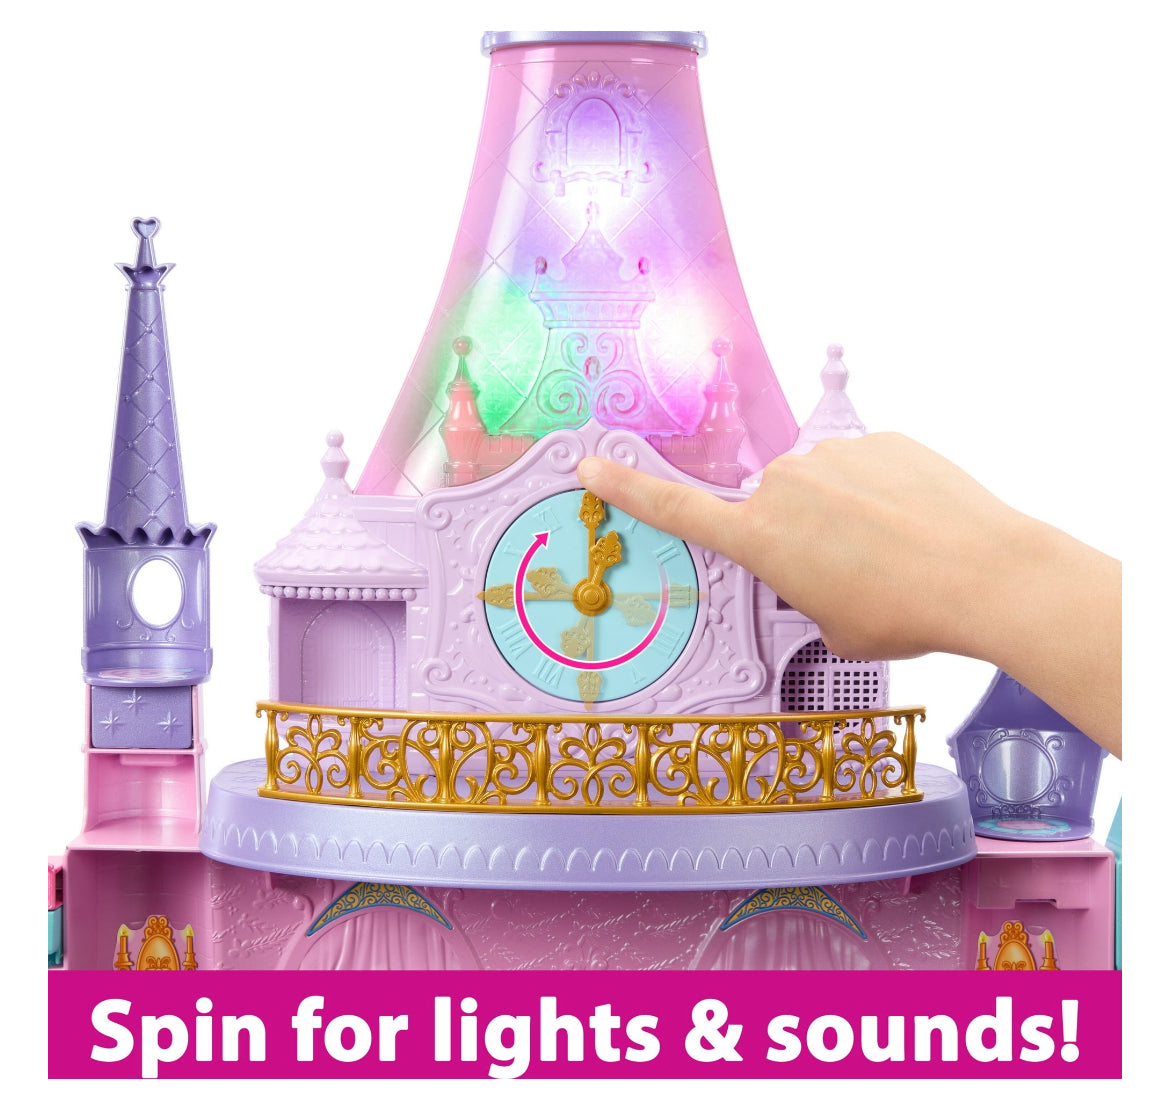 Disney Princess Magical Adventures Castle 12042